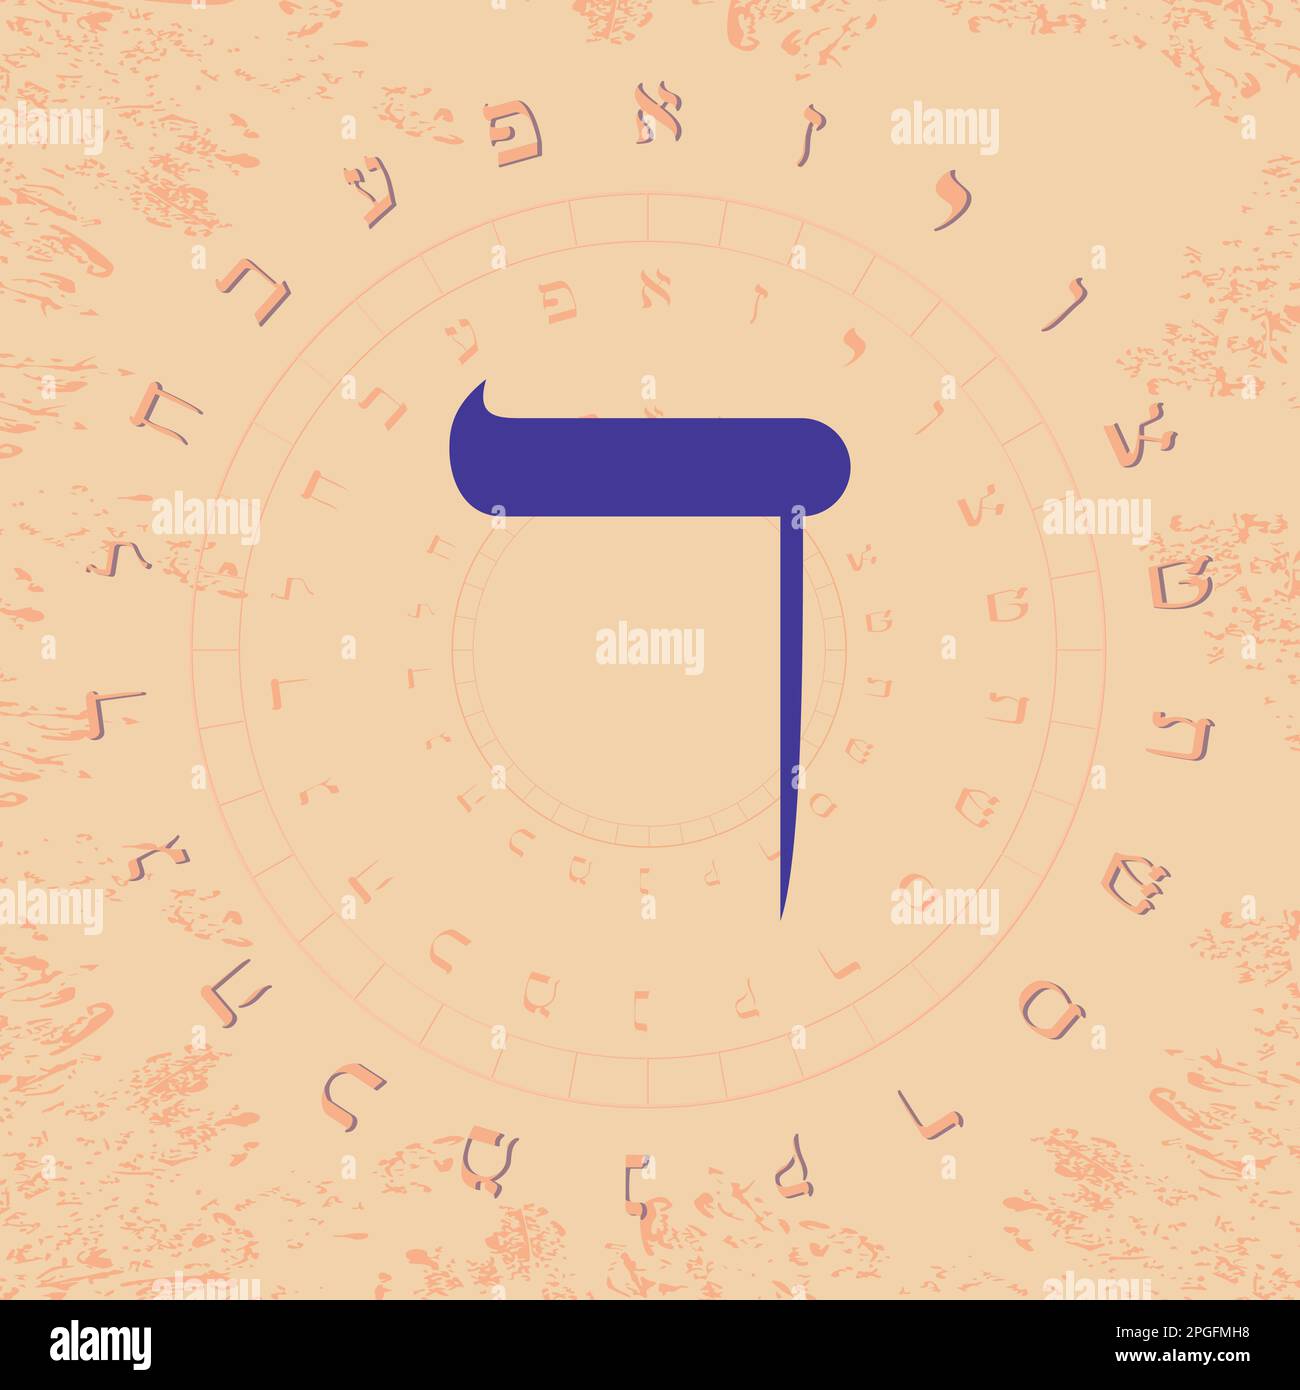 Vector illustration of the Hebrew alphabet in circular design. Large blue Hebrew letter called Resh. Stock Vector